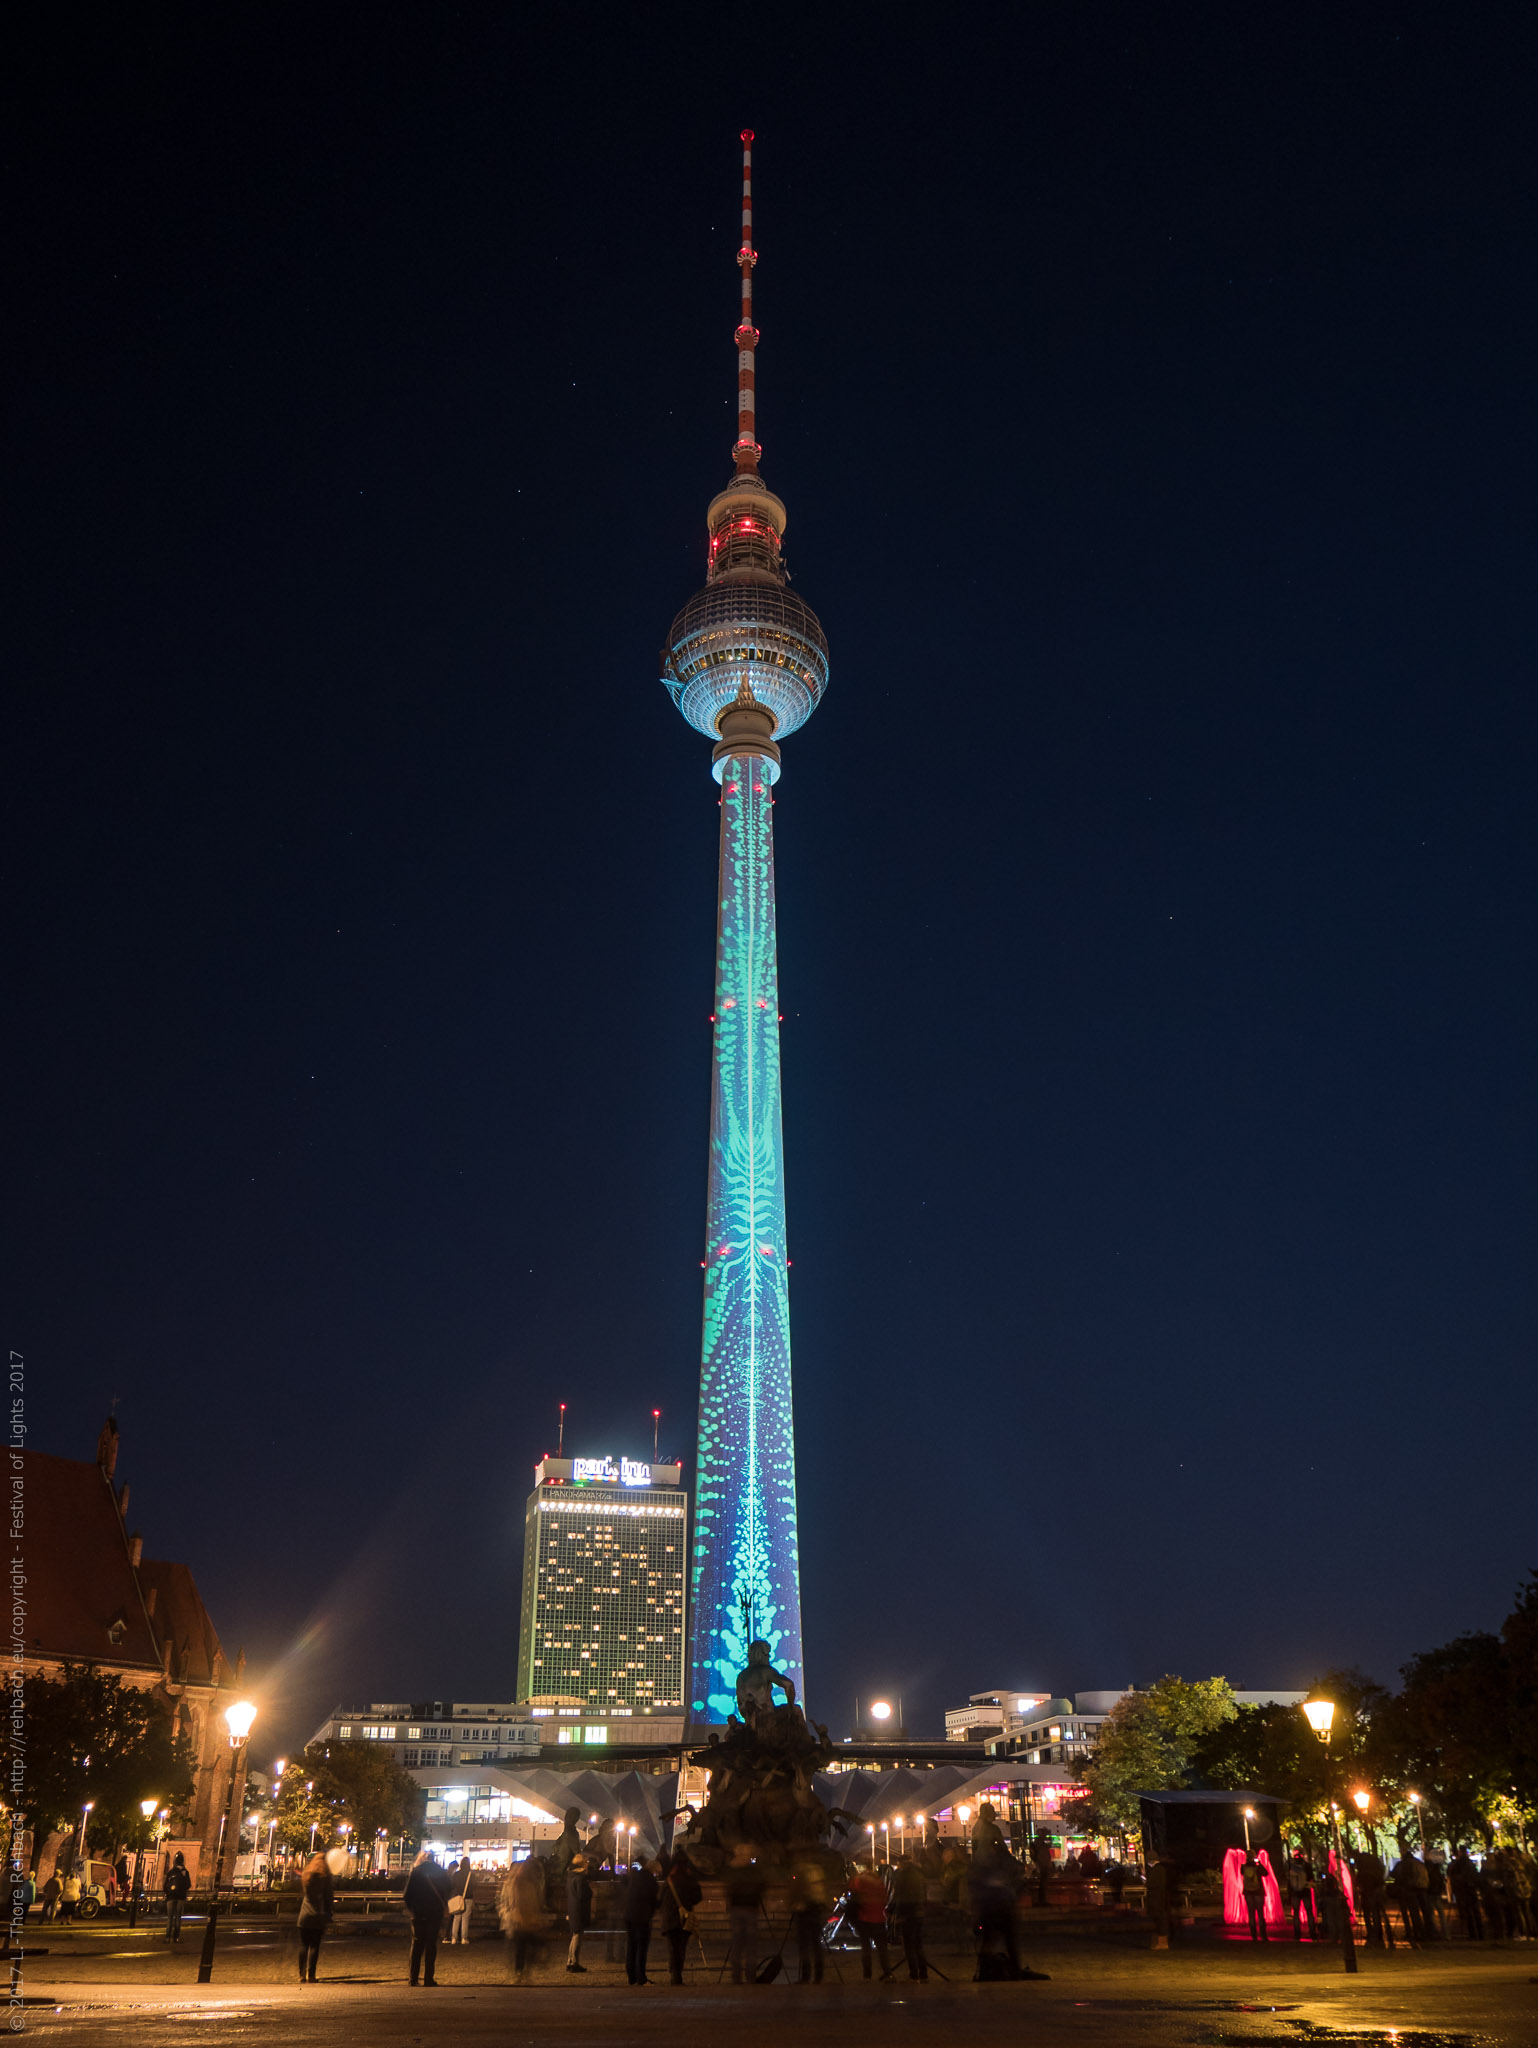 Illuminated TV Tower for Berlin's Festival of Lights